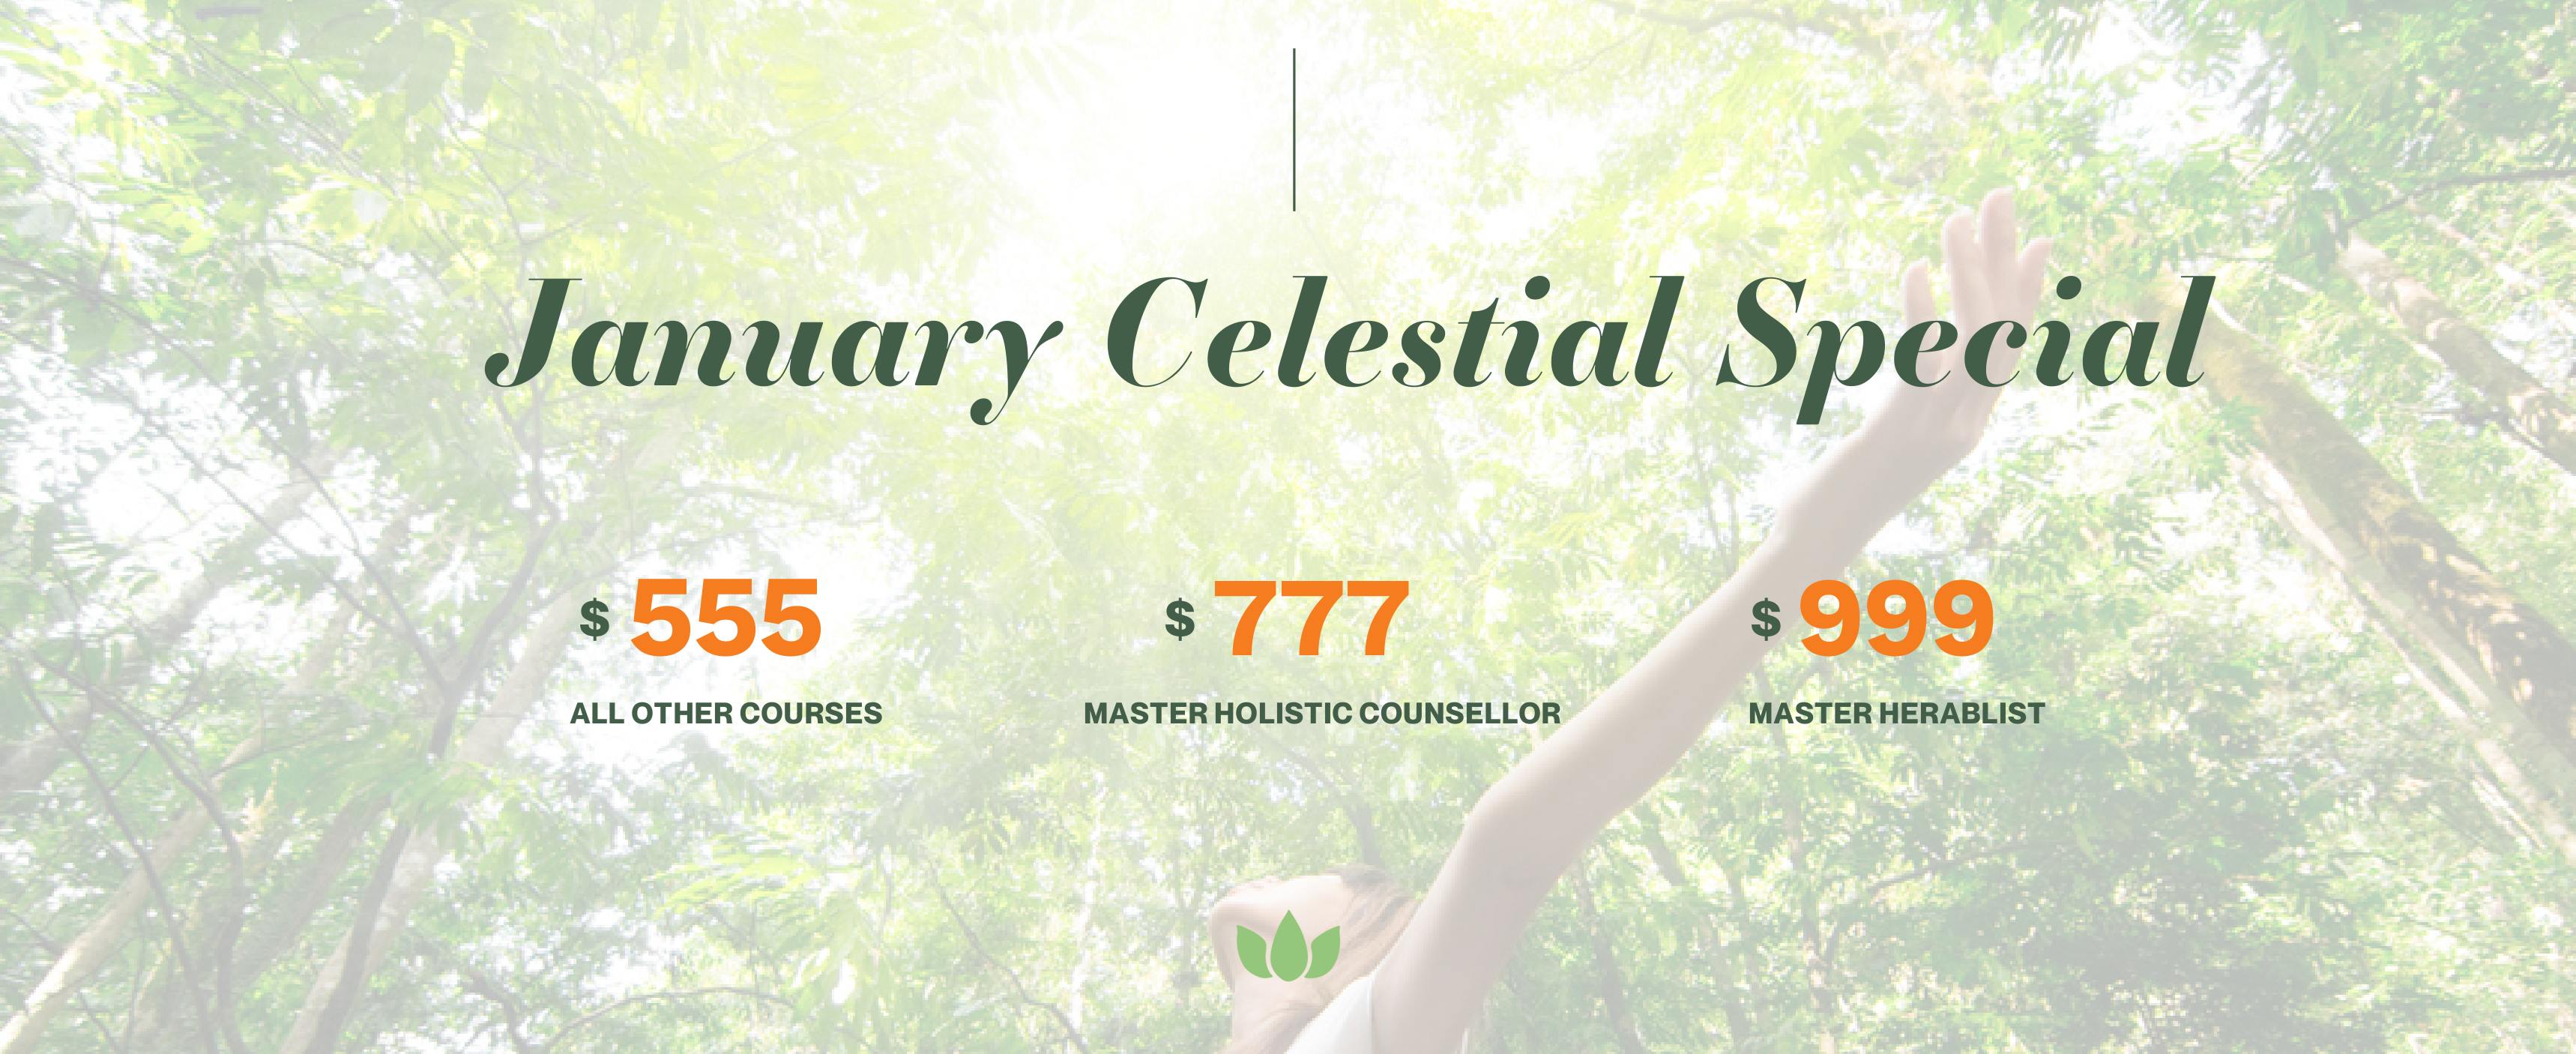 January Celestial Special